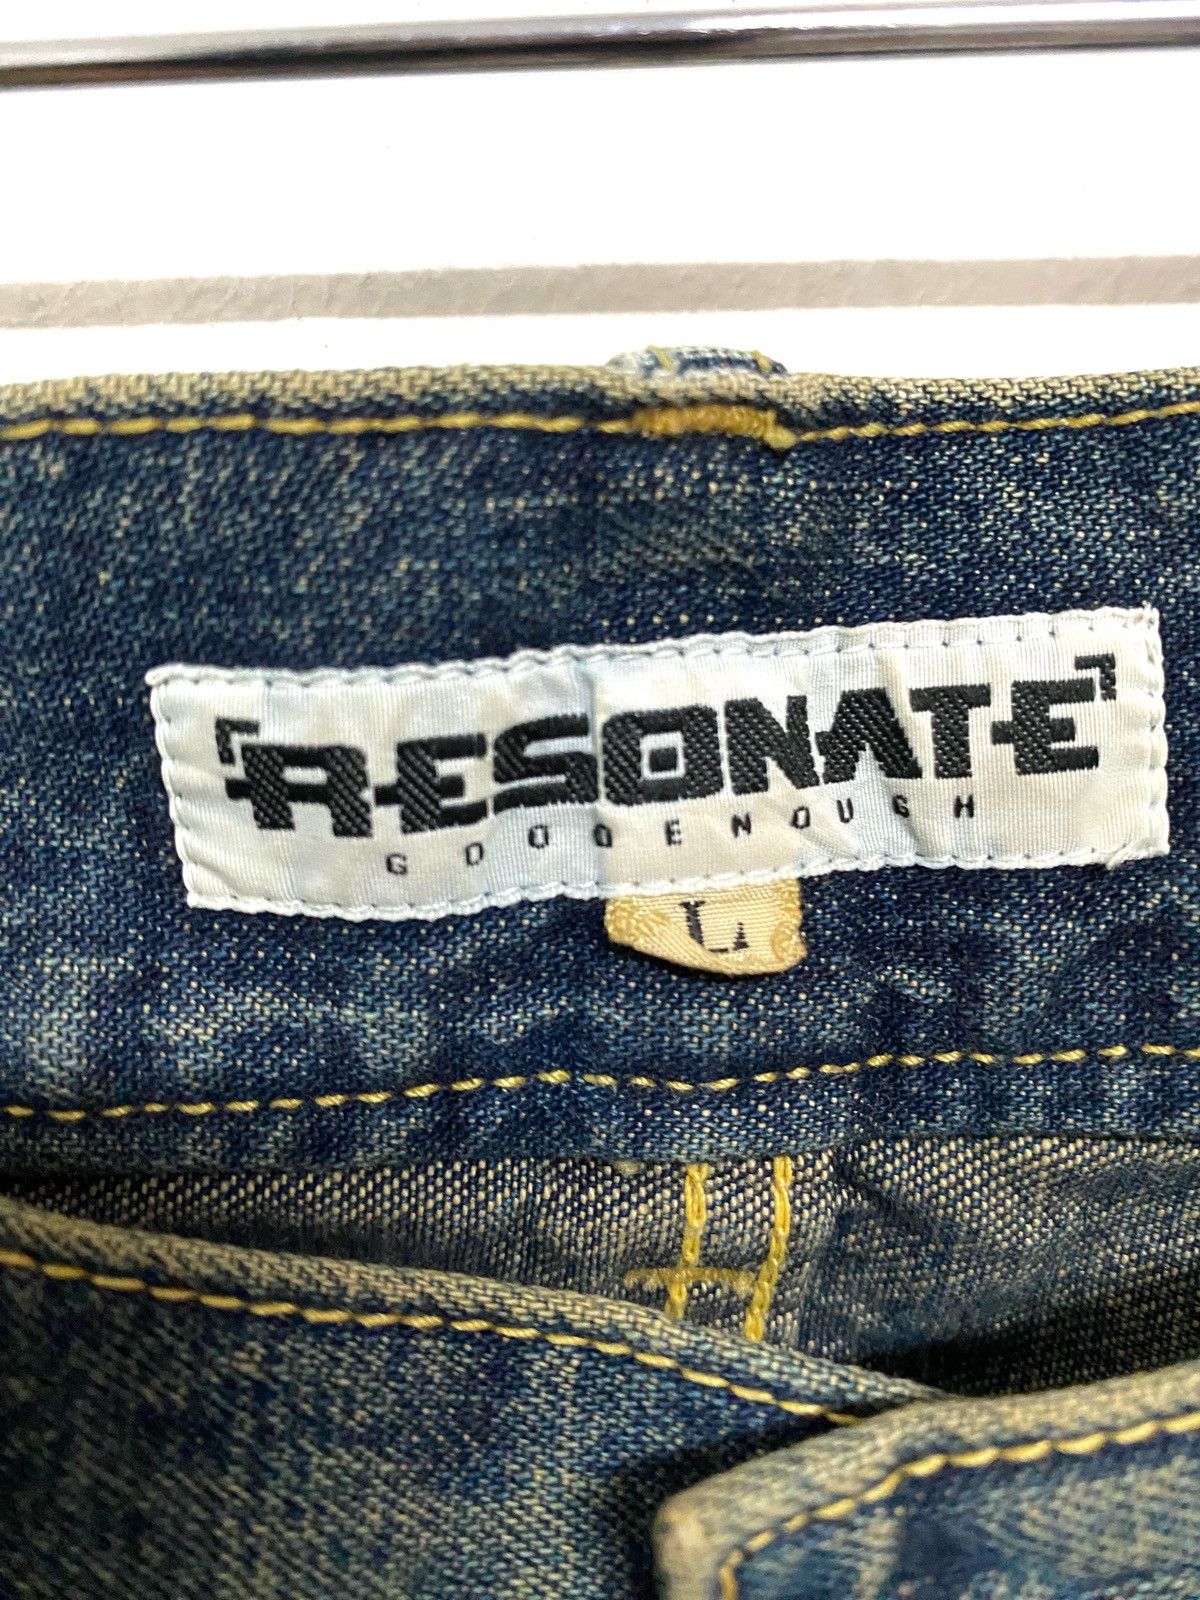 Goodenough - Good Enough Resonate Selvedge Denim Jeans - 15